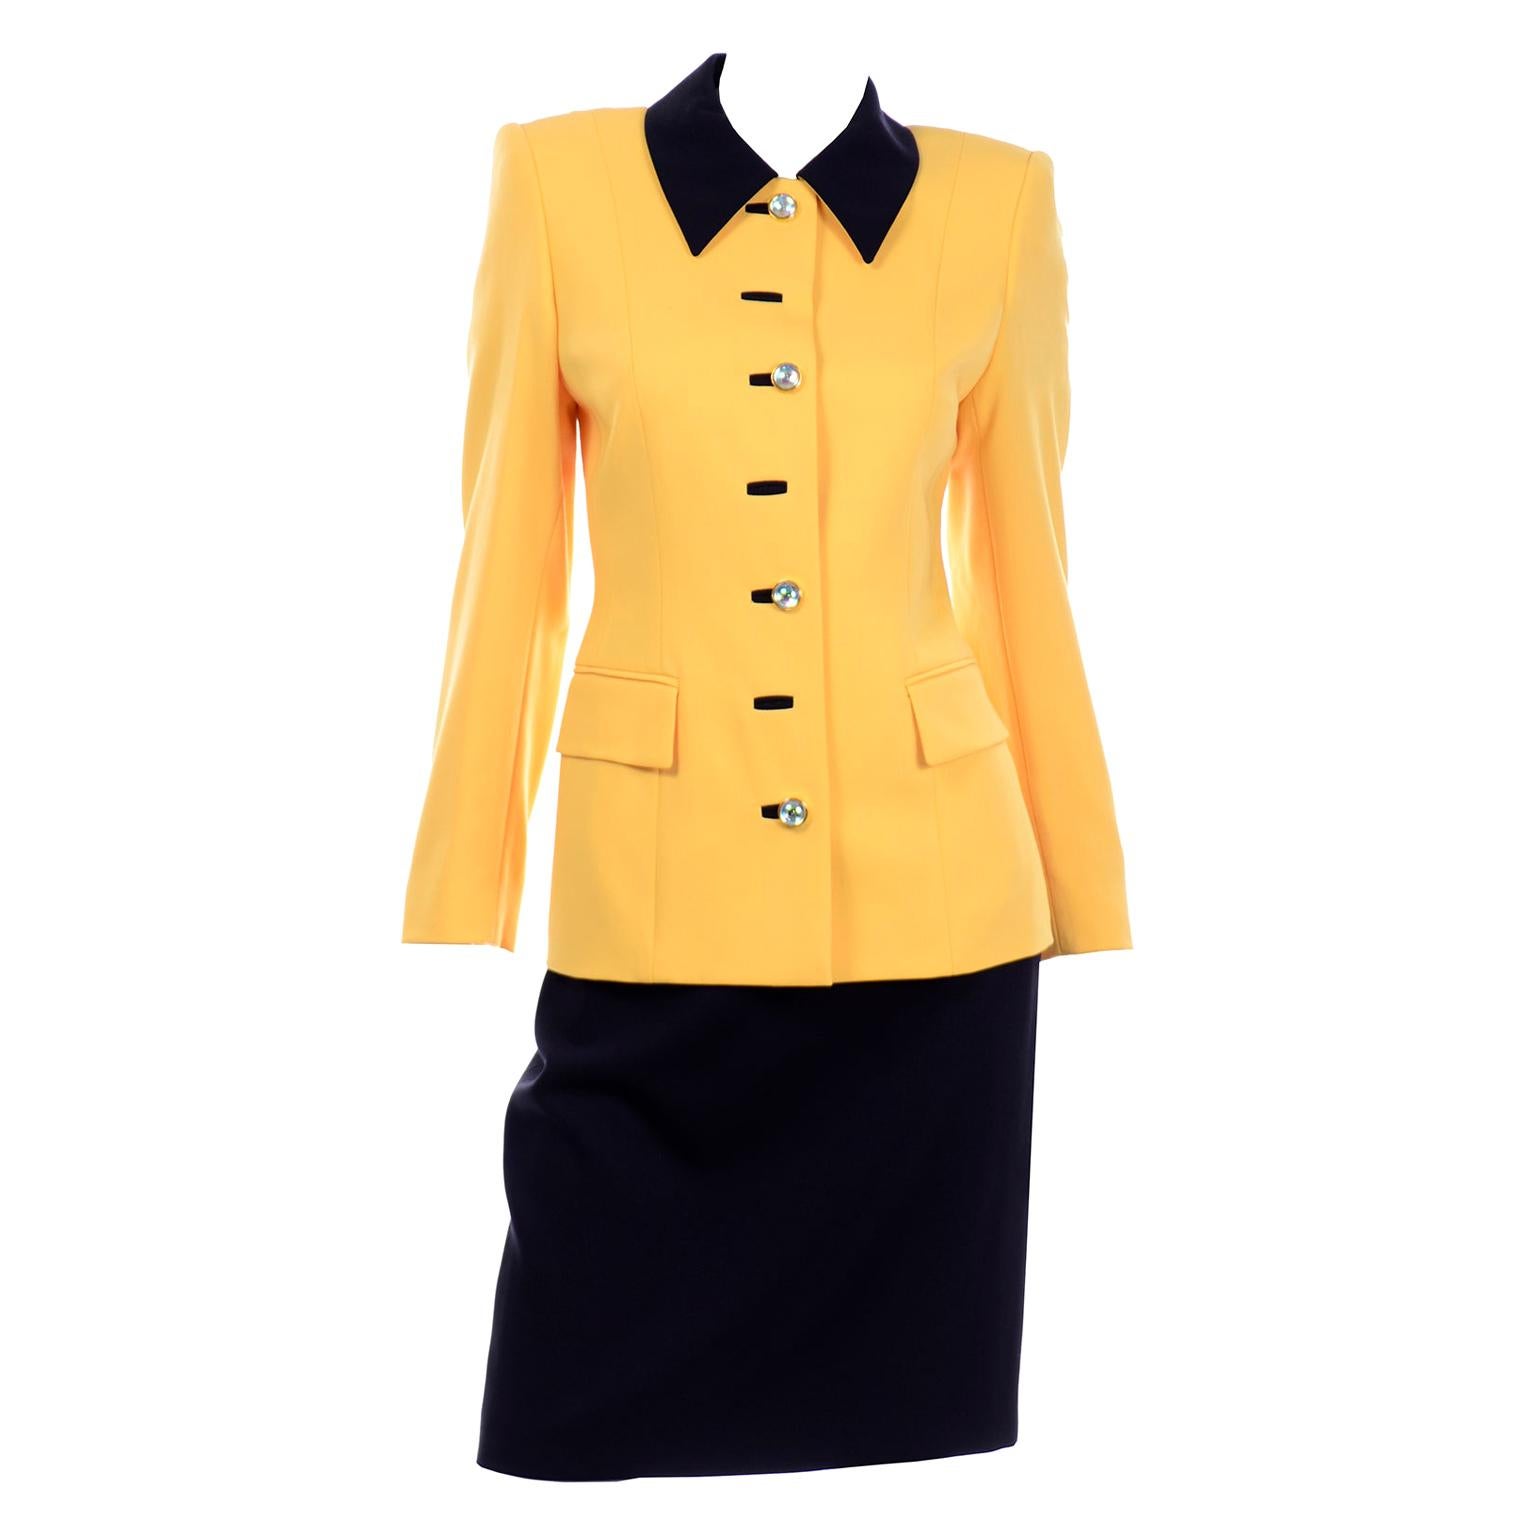 Escada Margaretha Ley Vintage Suit Yellow Jacket Silk Top & Black Pencil Skirt